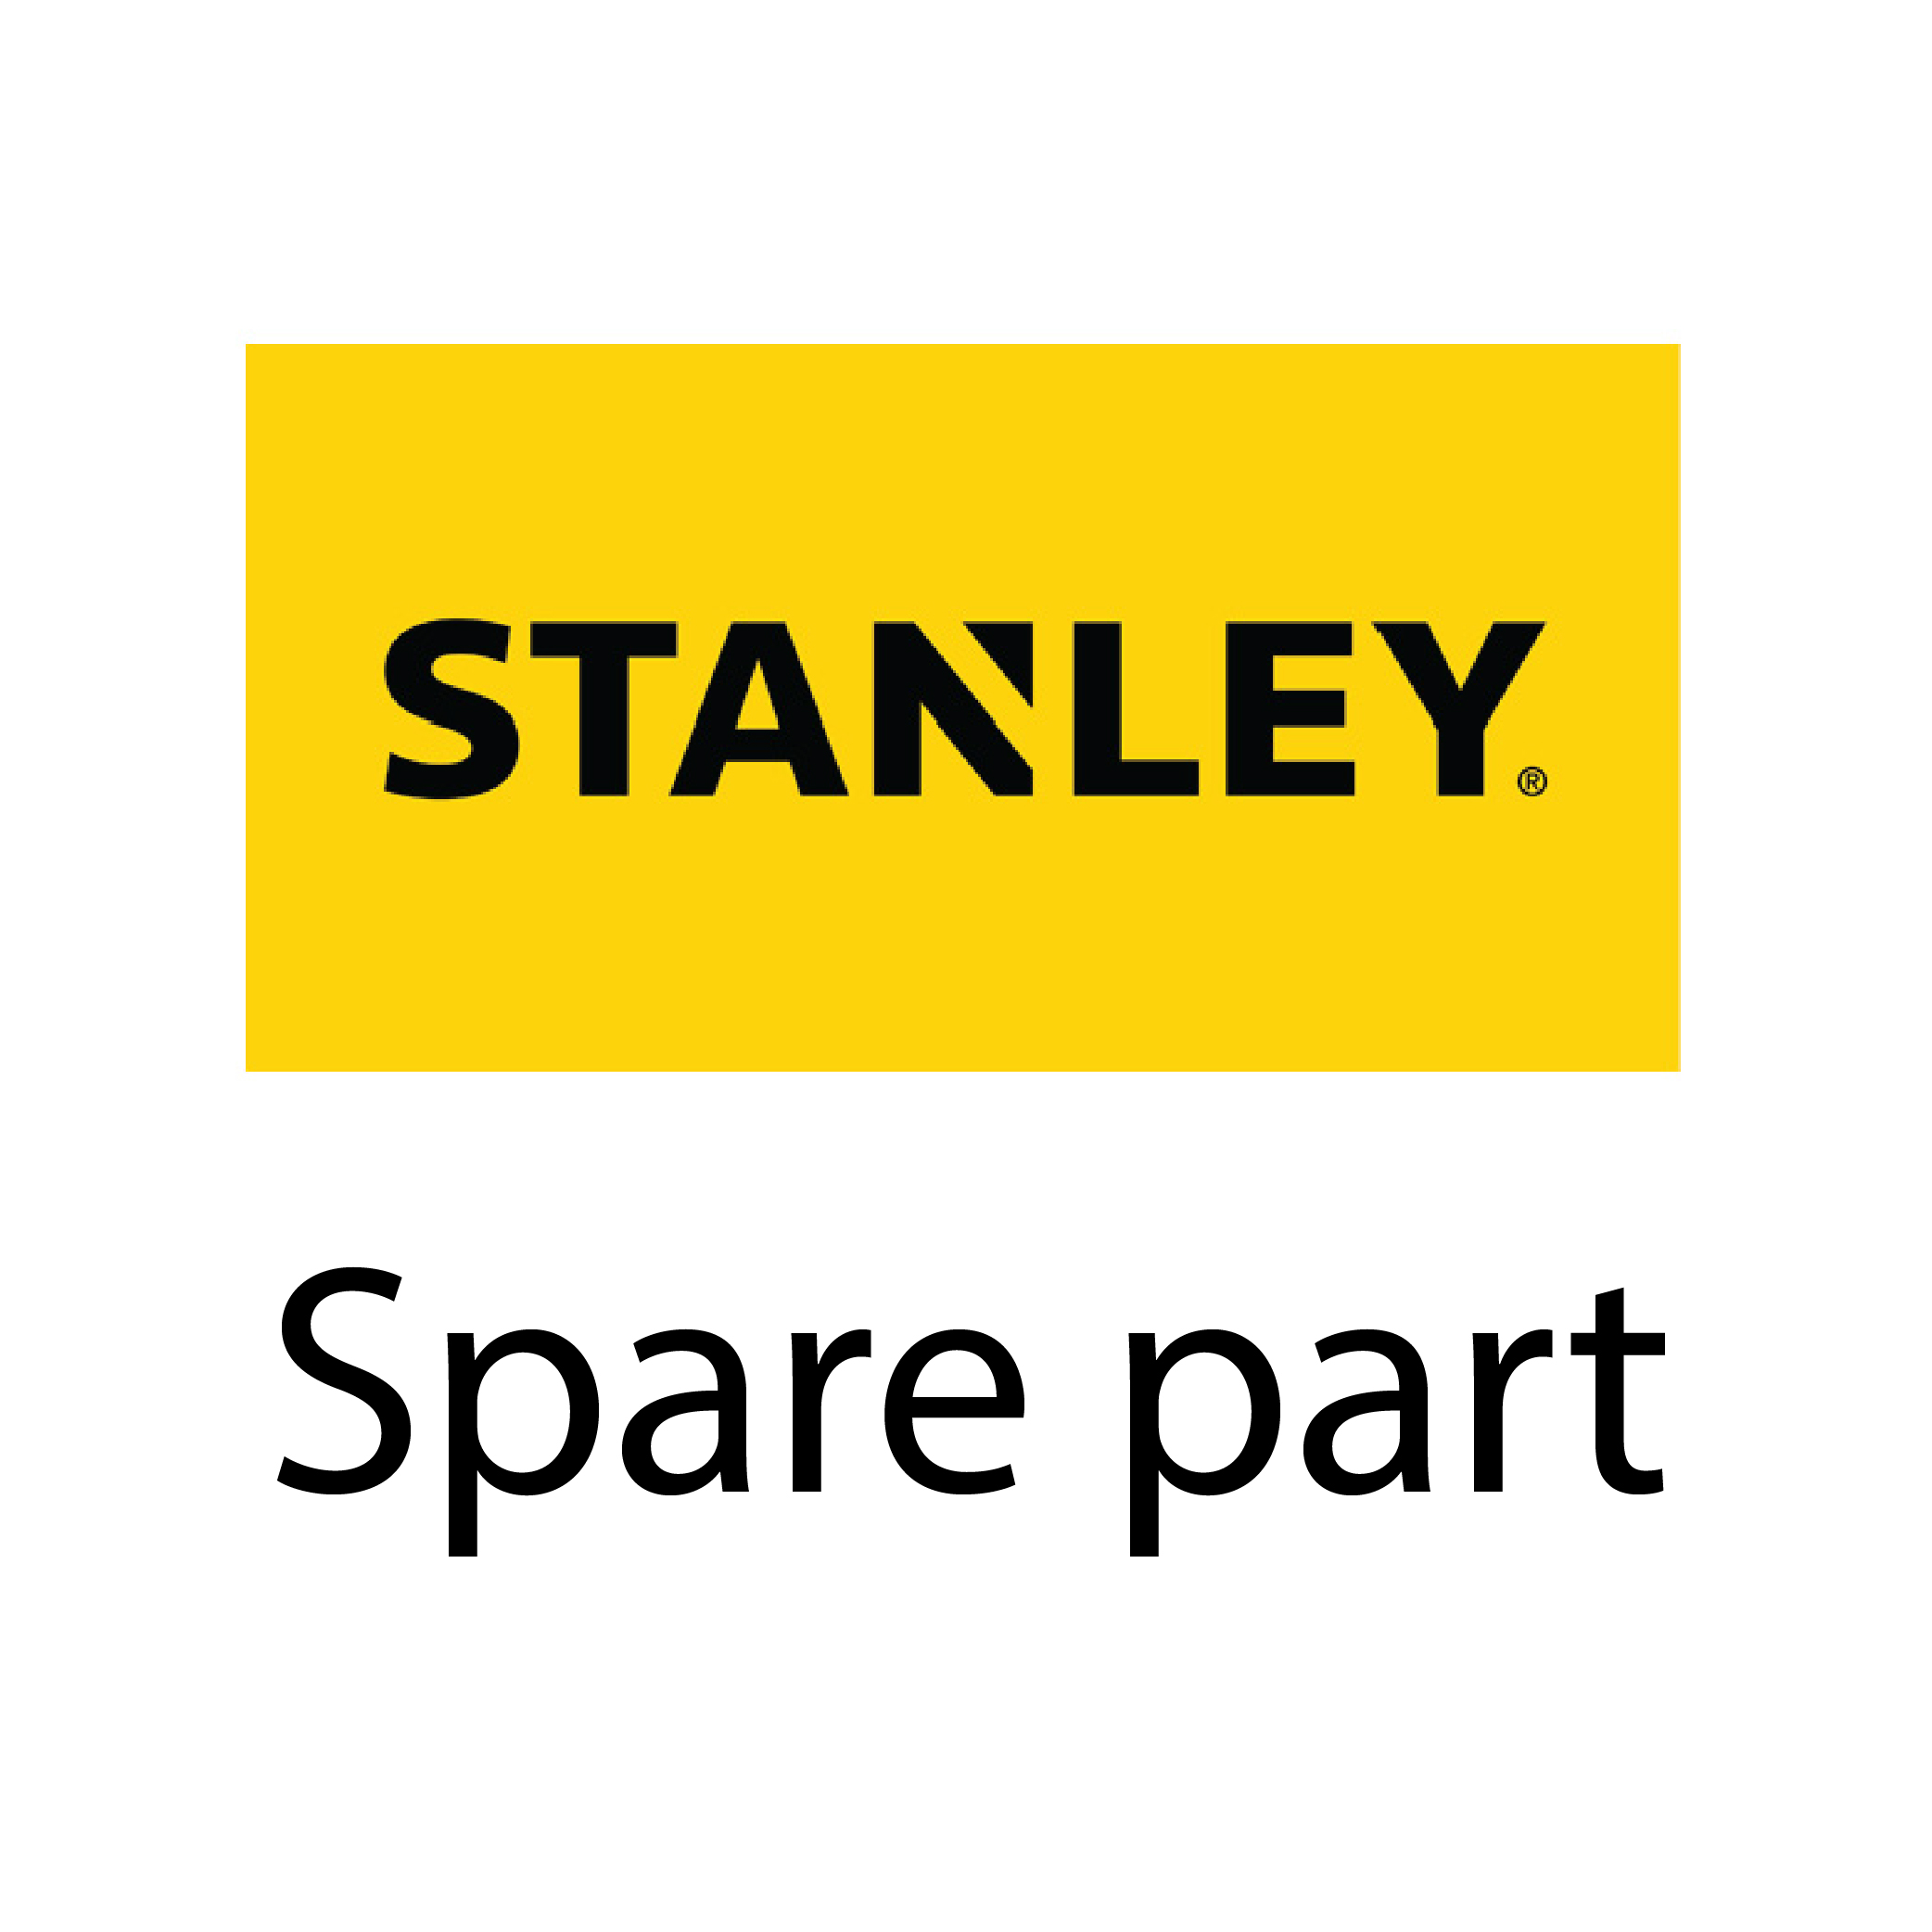 SKI - สกี จำหน่ายสินค้าหลากหลาย และคุณภาพดี | STANLEY 1004518-74 #97 ฟิวคอยส์ STEL506K